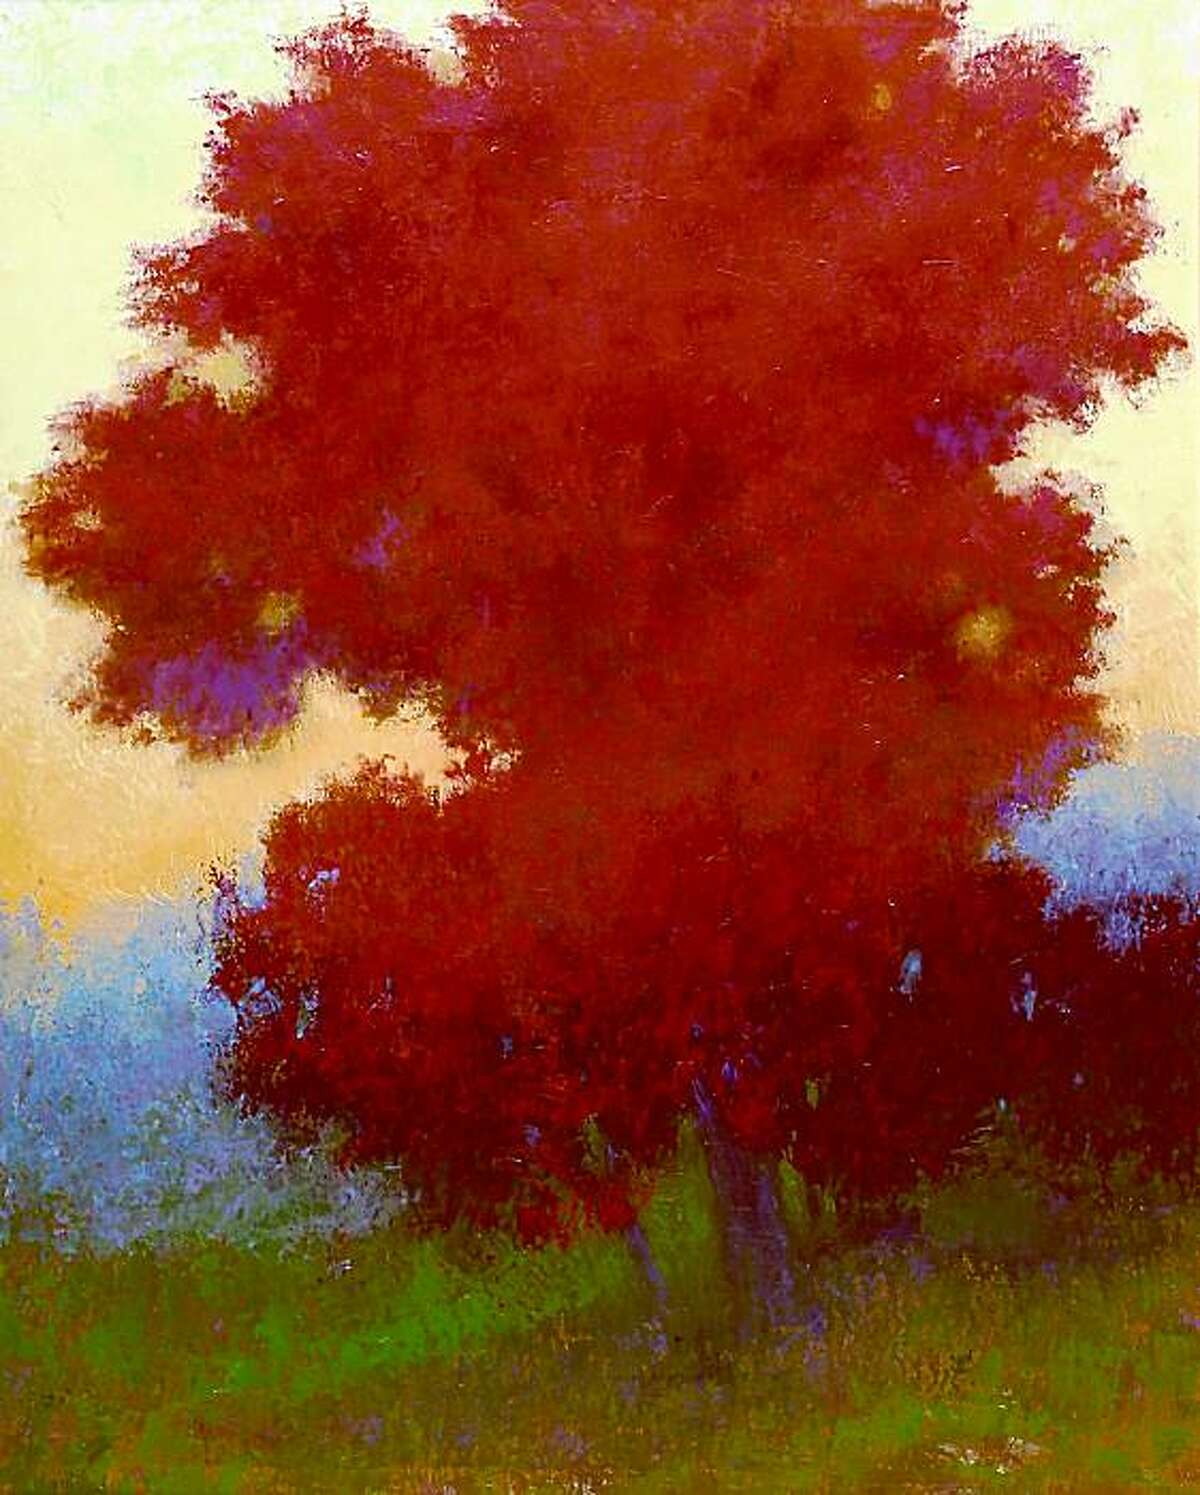 Red Bush, 1990s, oil on canvas, Richard Mayhew